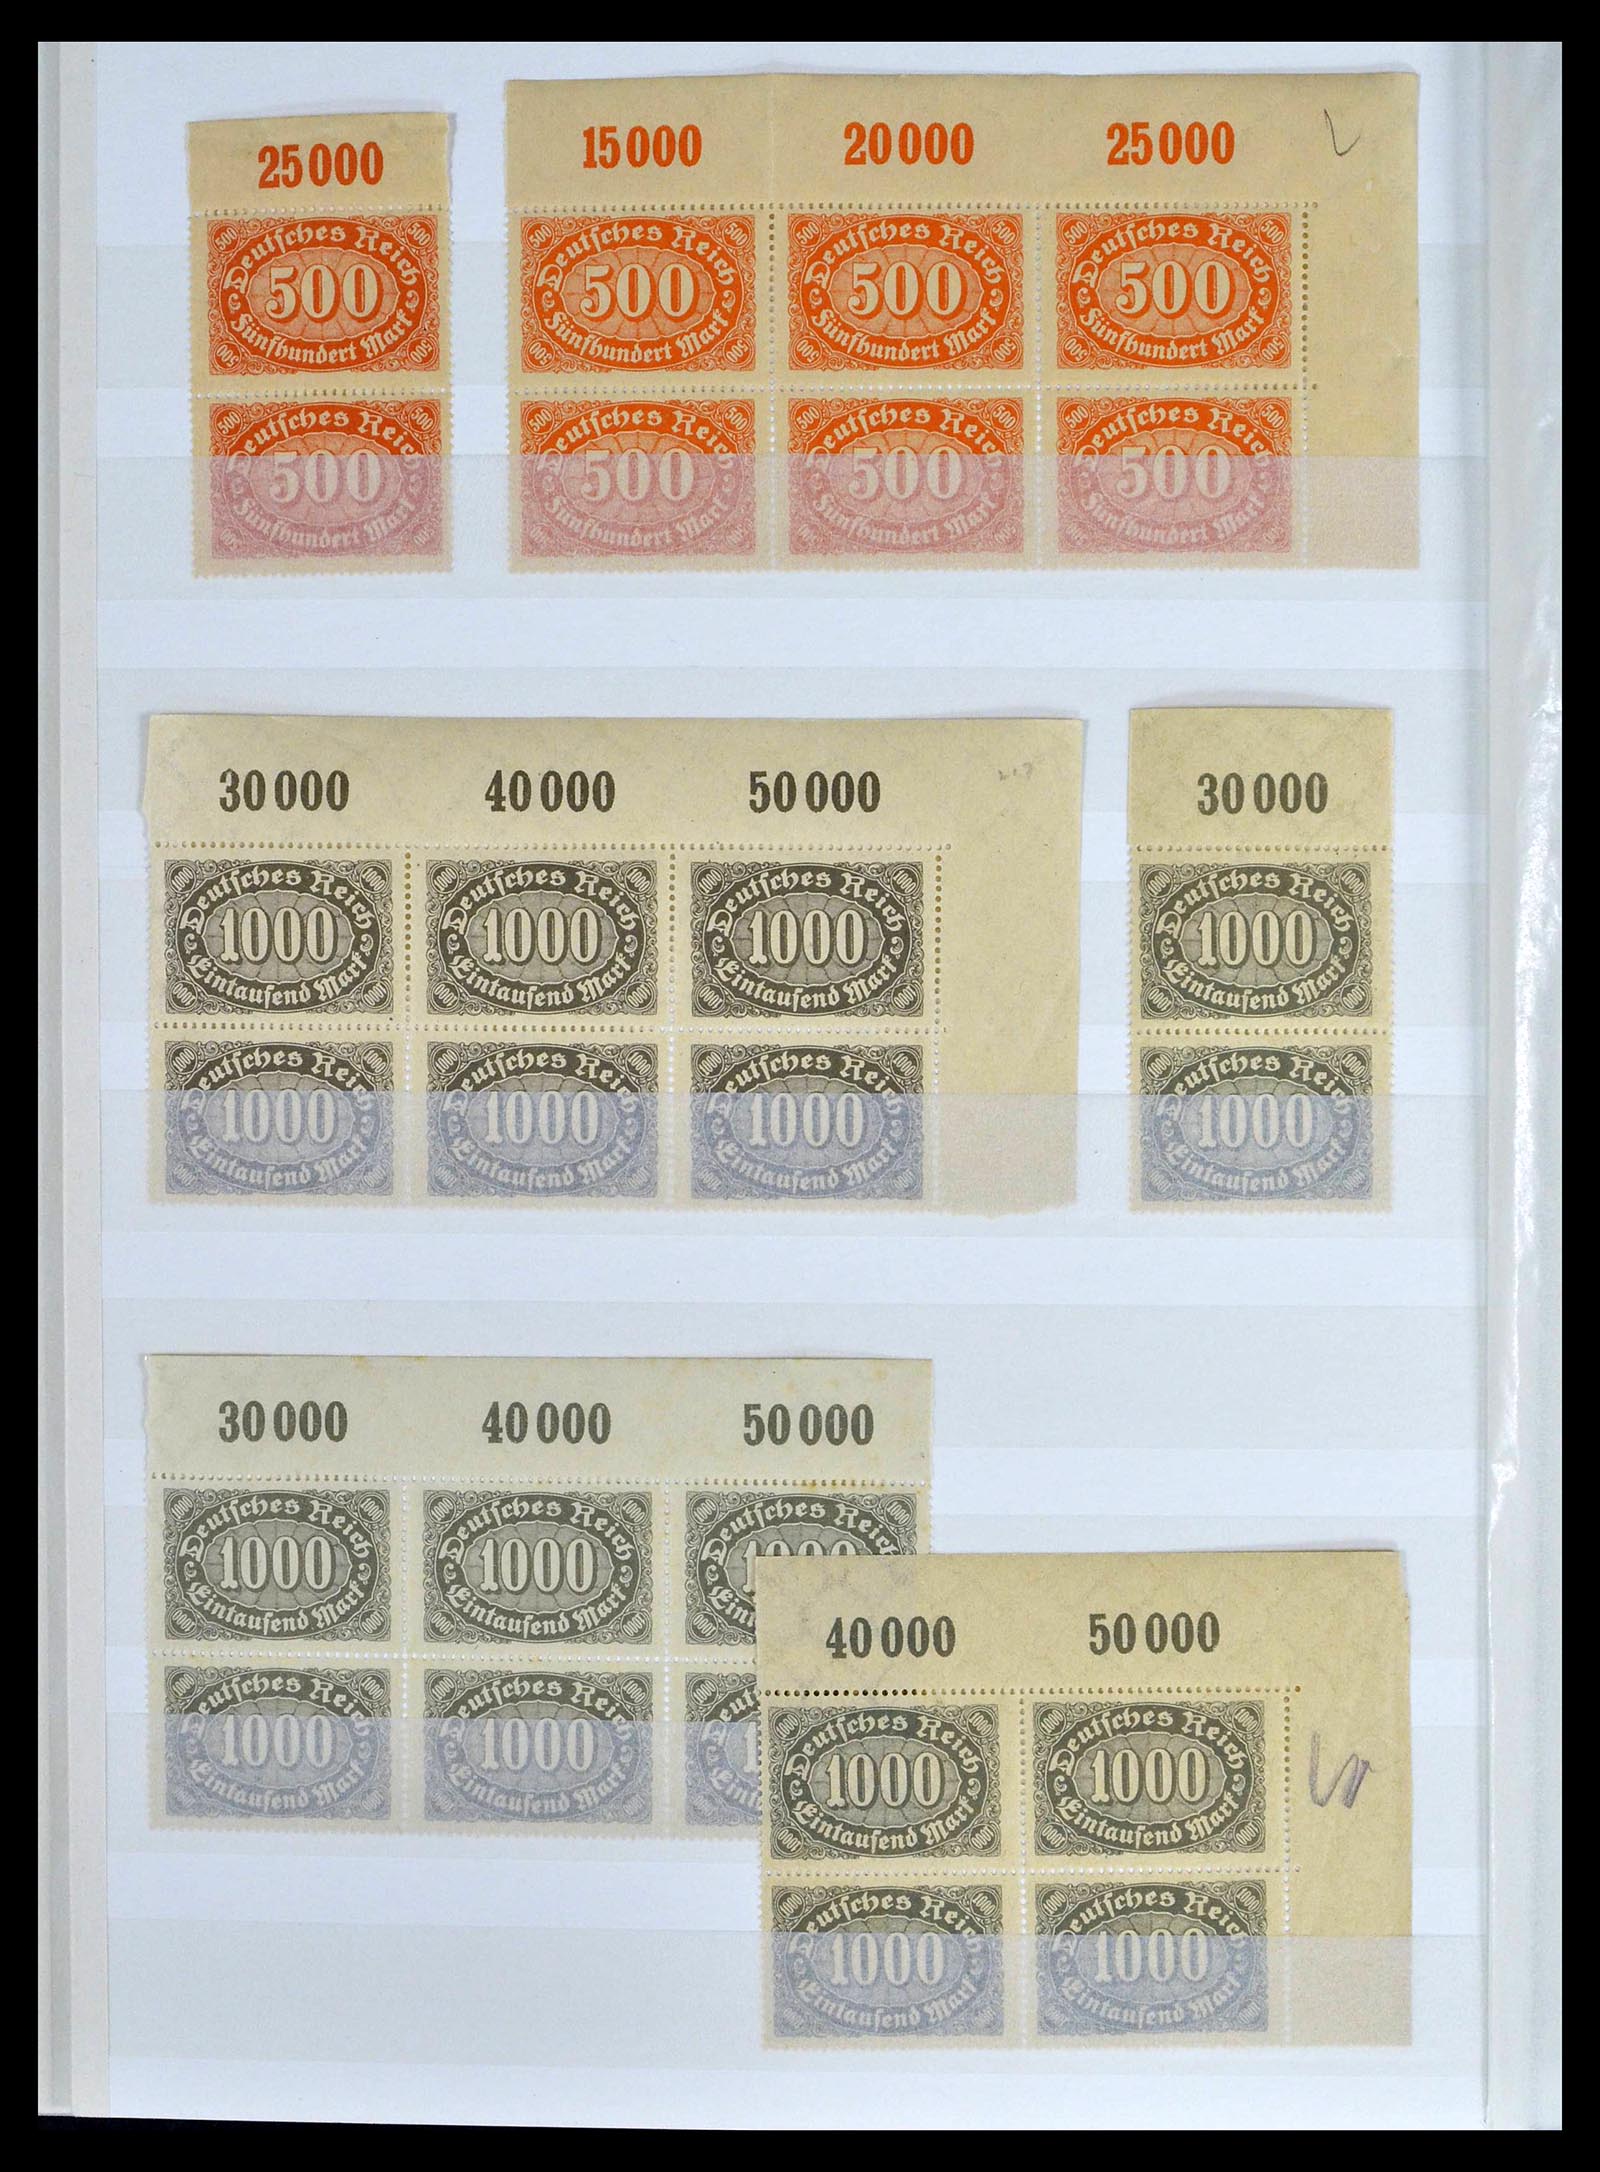 39254 0036 - Stamp collection 39254 German Reich MNH top margins.